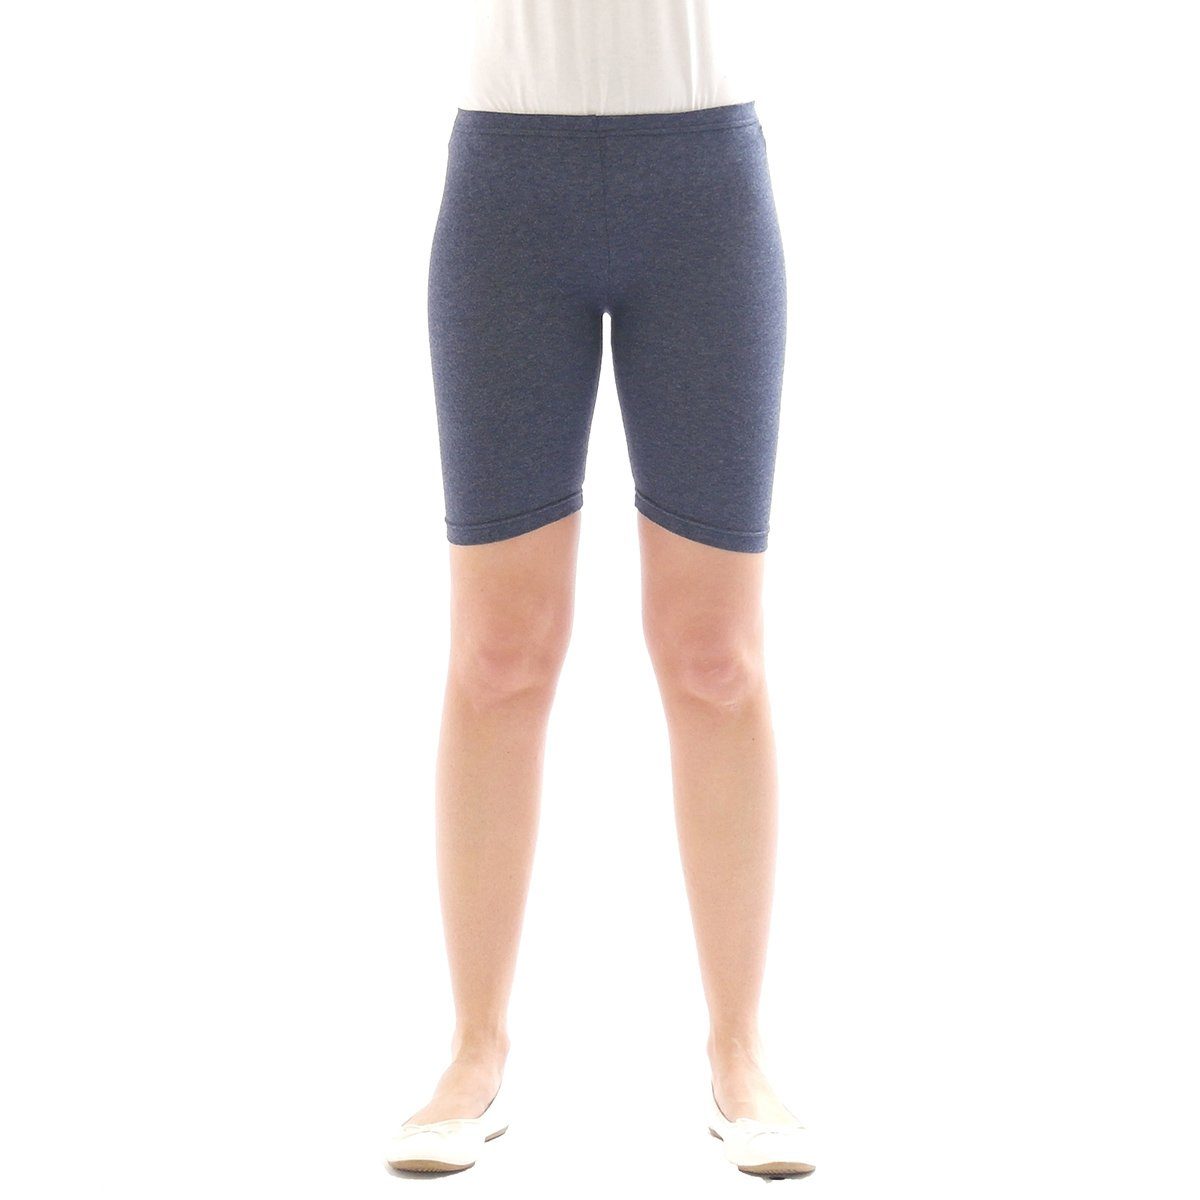 Kinder Pants Baumwolle Jungen Sport 1/2 Shorts SYS Shorts Mädchen jeans